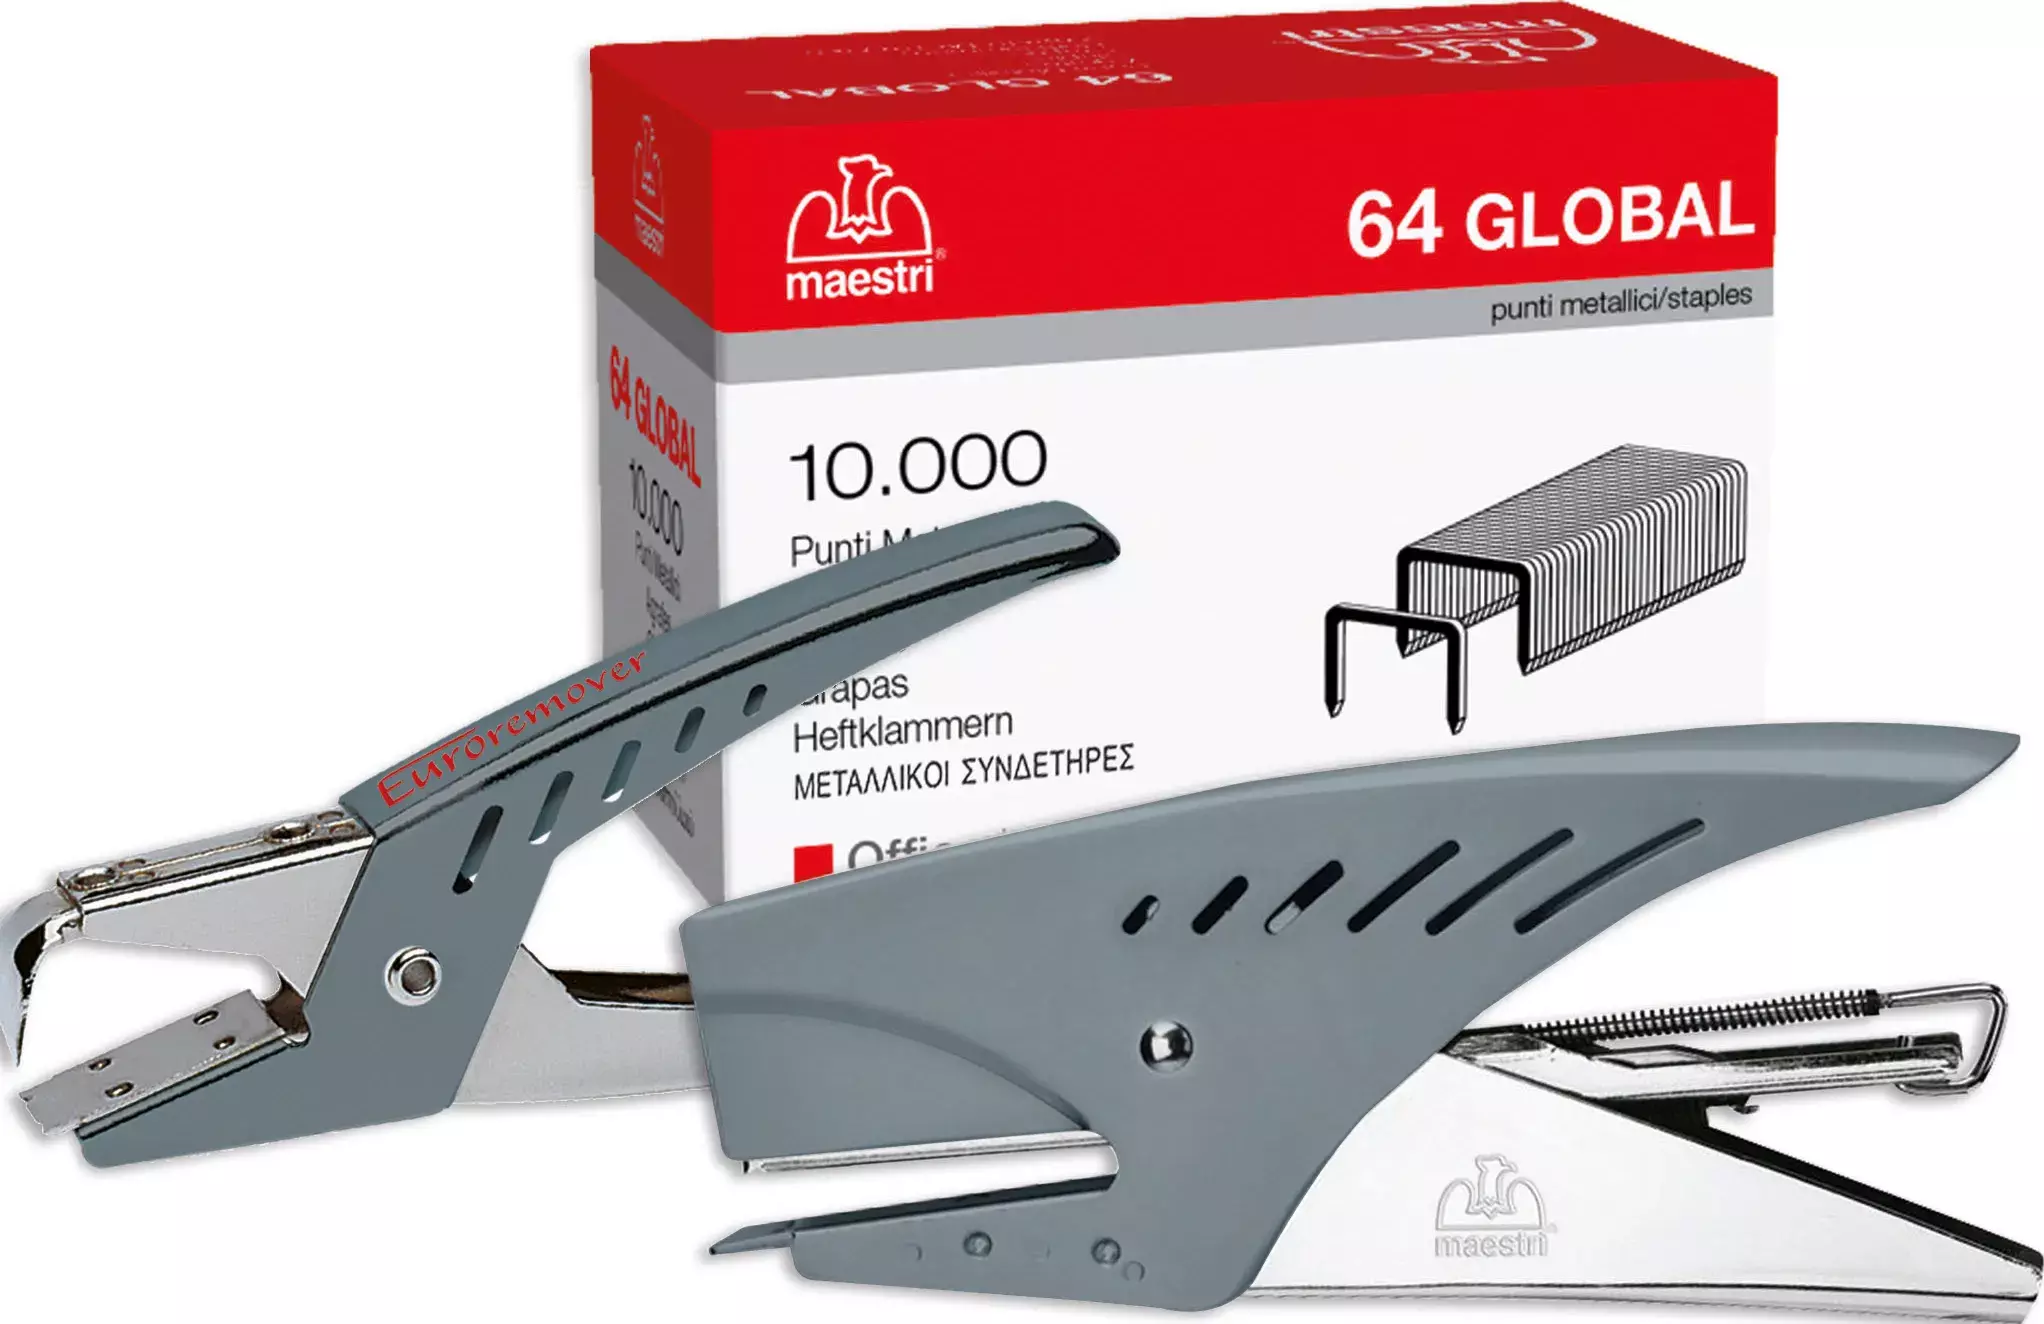 gbc n1 plier 6 - n1 remover - n10.000 punti staples  Global 64 no leaflet, utilizza punti Jolly - 64 - 68  e tutti i punti passo 6mm KIT EUROLINE A.